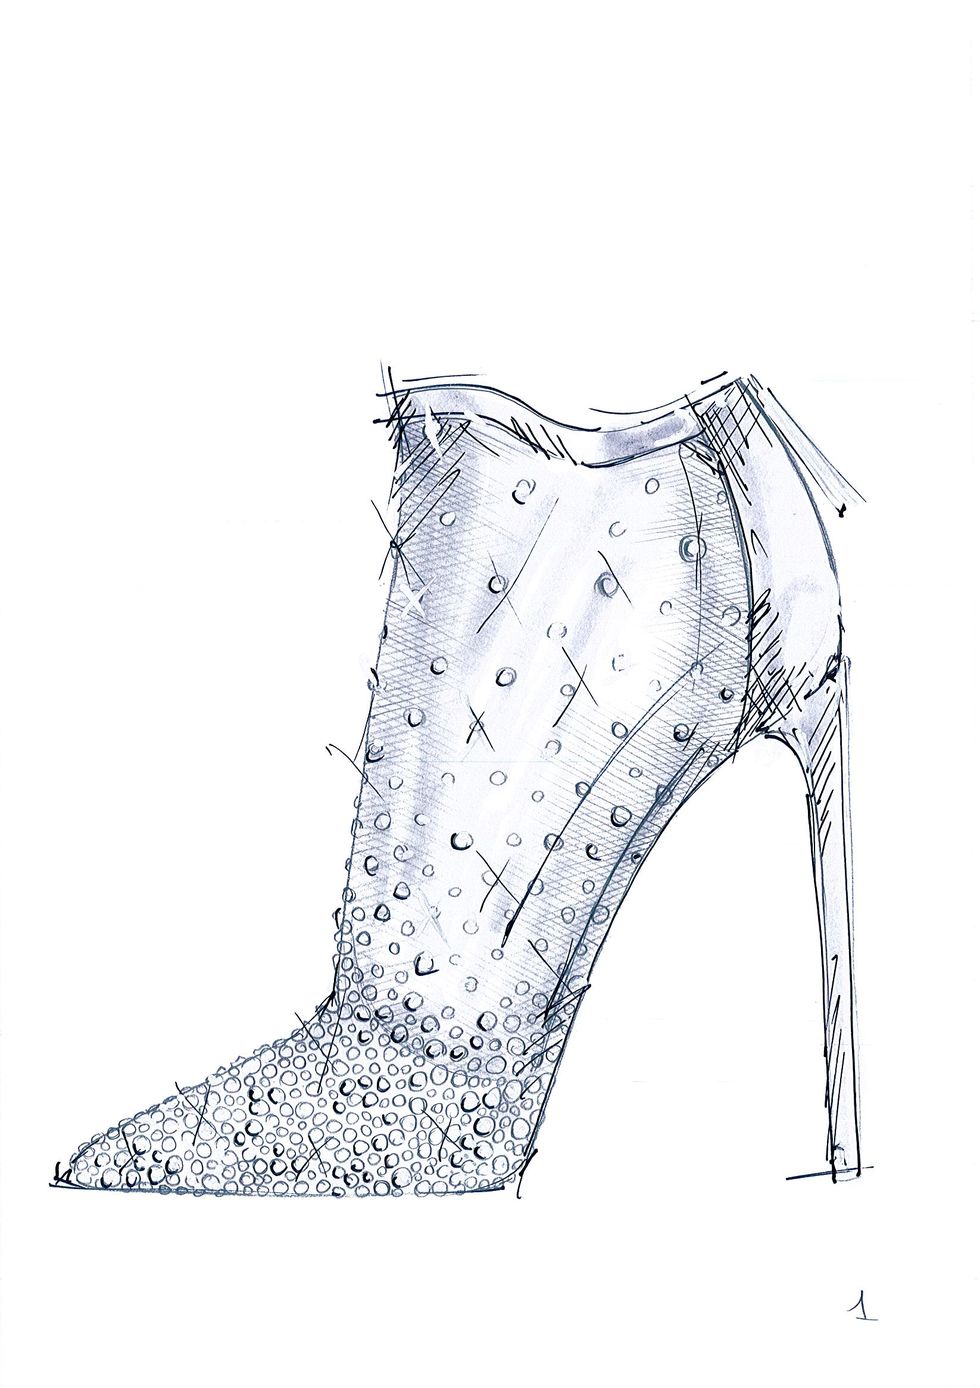 Cinderella's new slippers designed by Stuart Weitzman